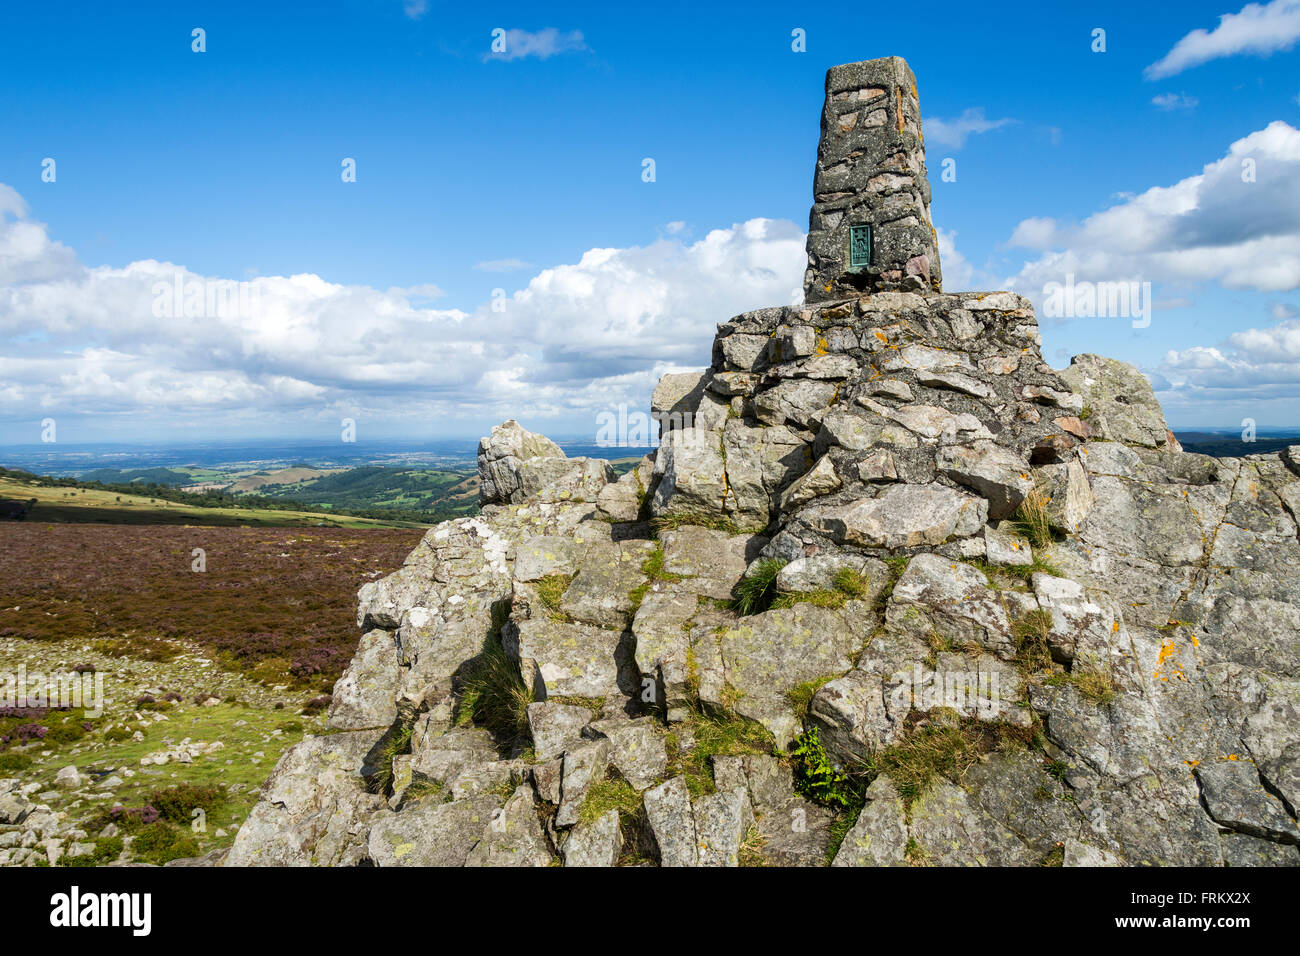 The trig point at Manstone Rock on the Stiperstones Ridge, Shropshire, England, UK. Stock Photo